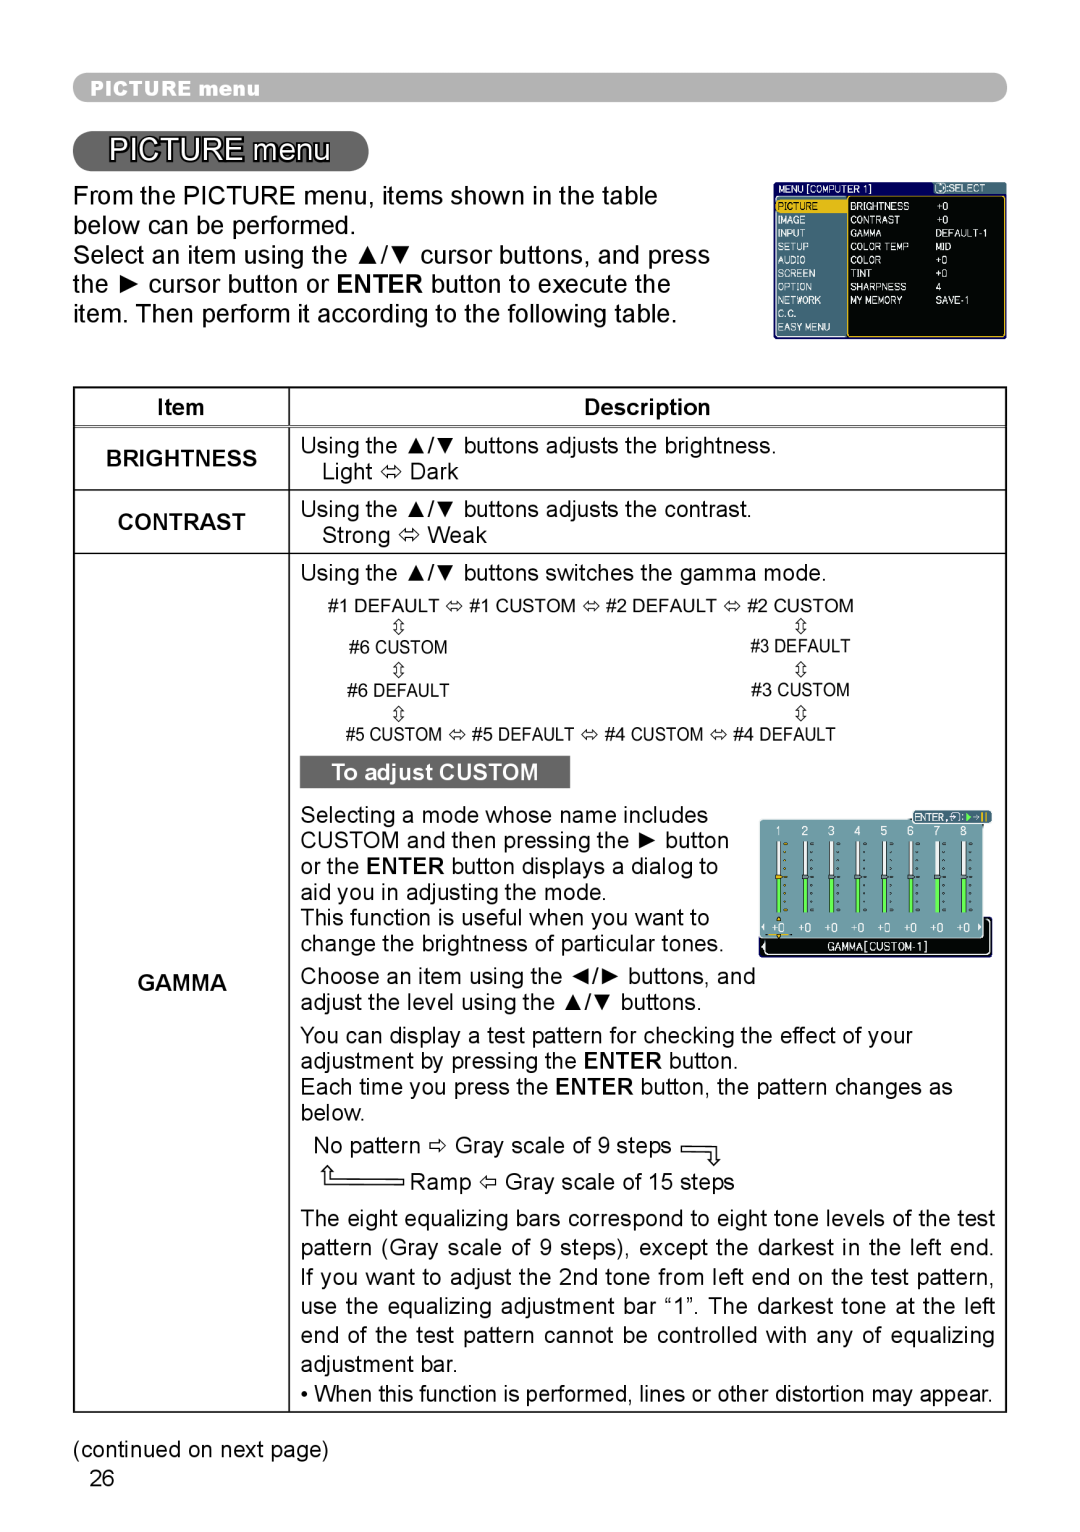 Hitachi CP-X206, CP-X306 user manual PICTURE menu, Description, Brightness, Contrast, To adjust CUSTOM, Gamma 